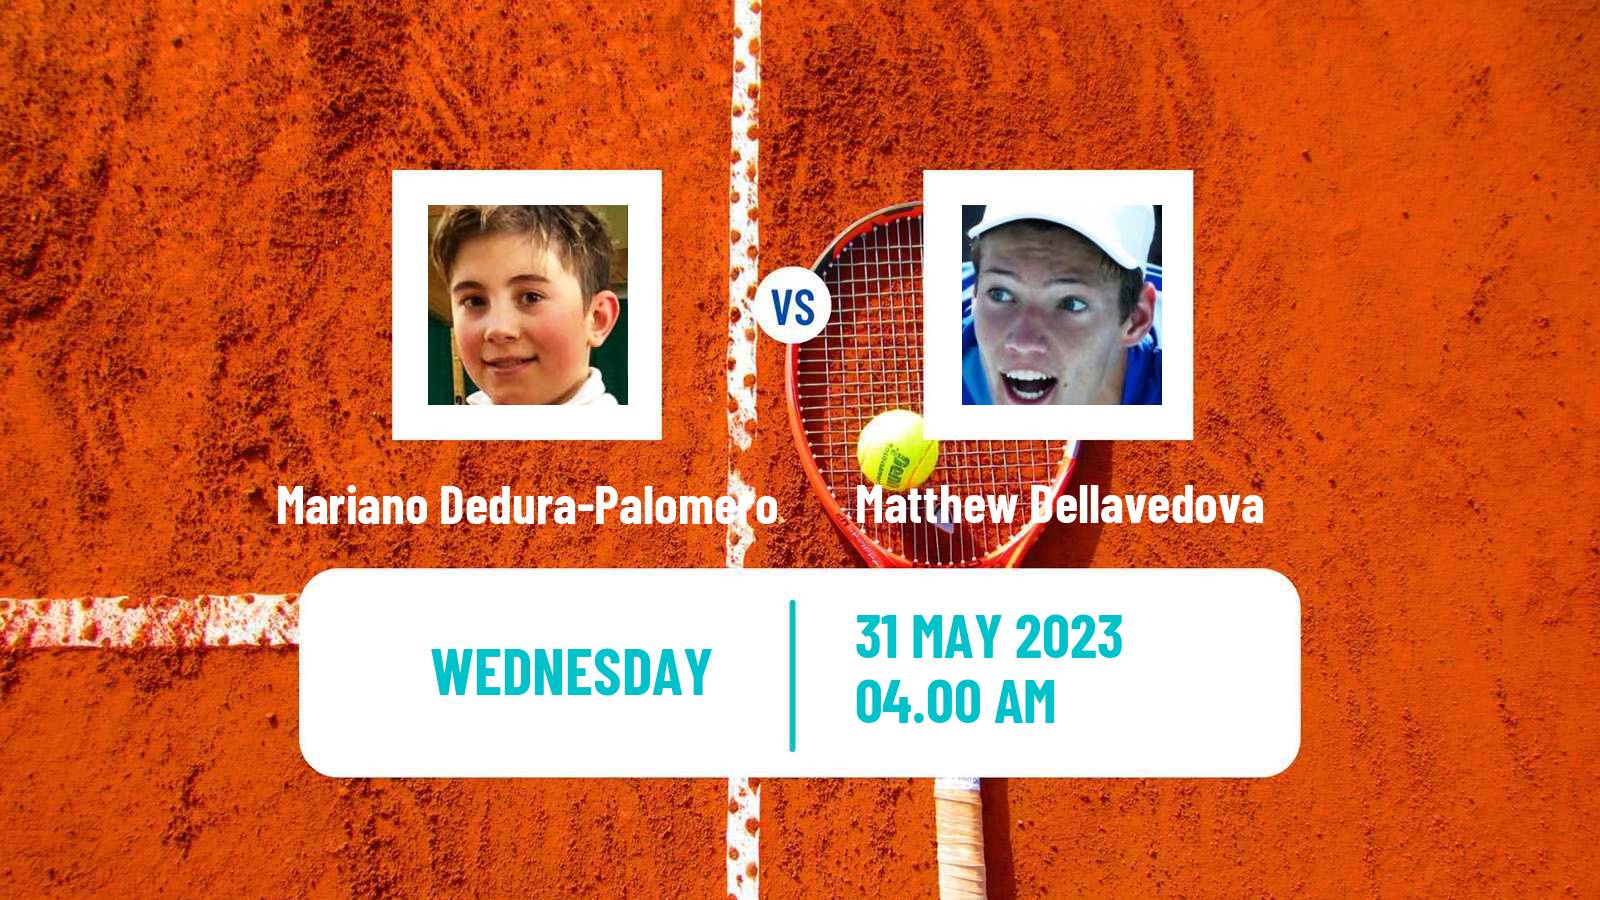 Tennis ITF M25 Jablonec Nad Nisou Men Mariano Dedura-Palomero - Matthew Dellavedova